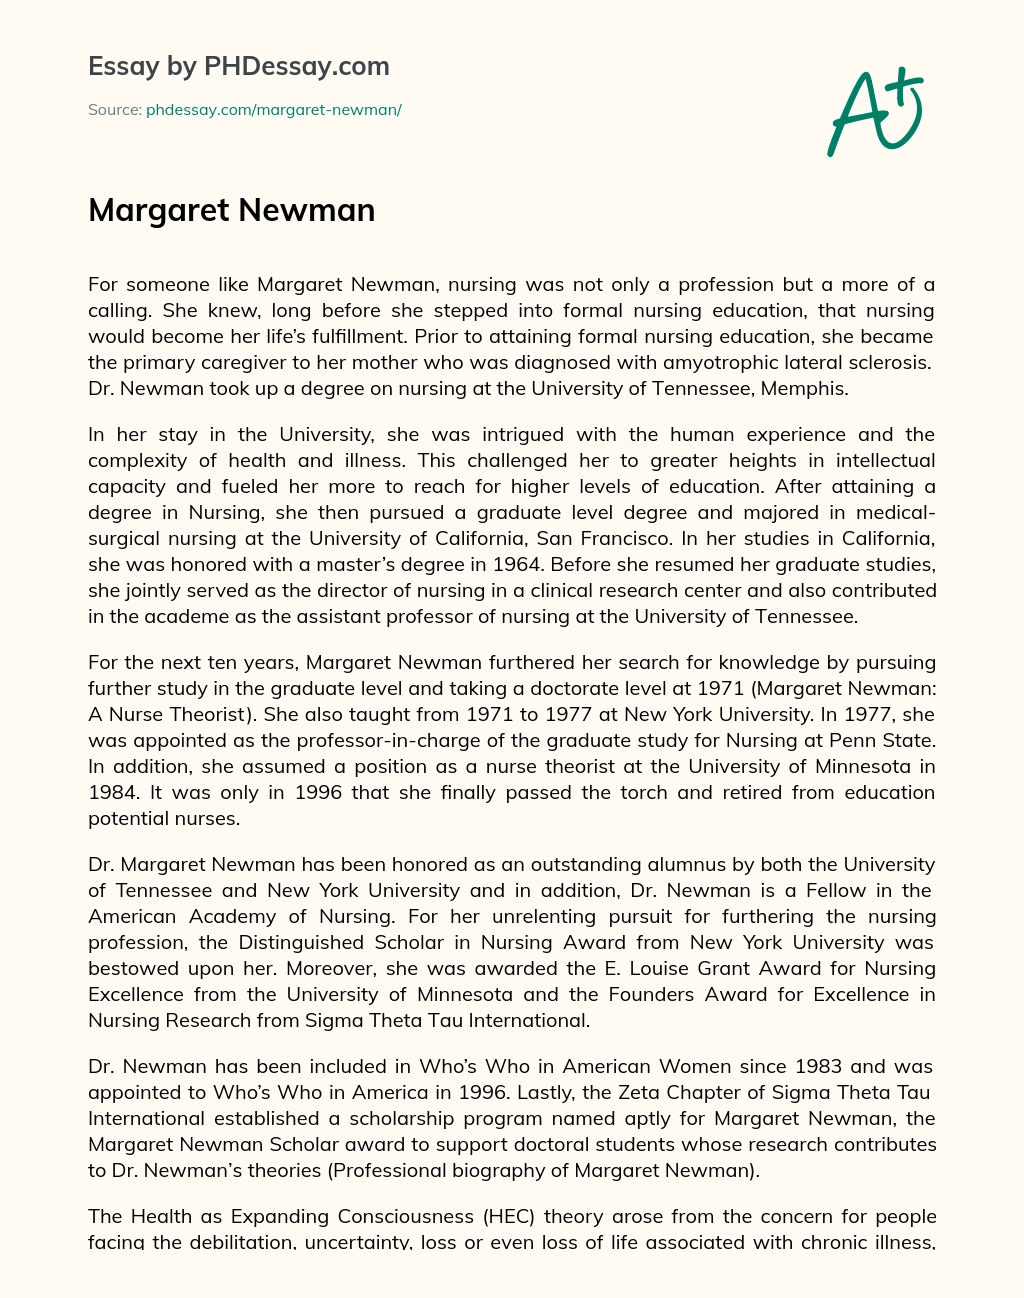 Margaret Newman essay